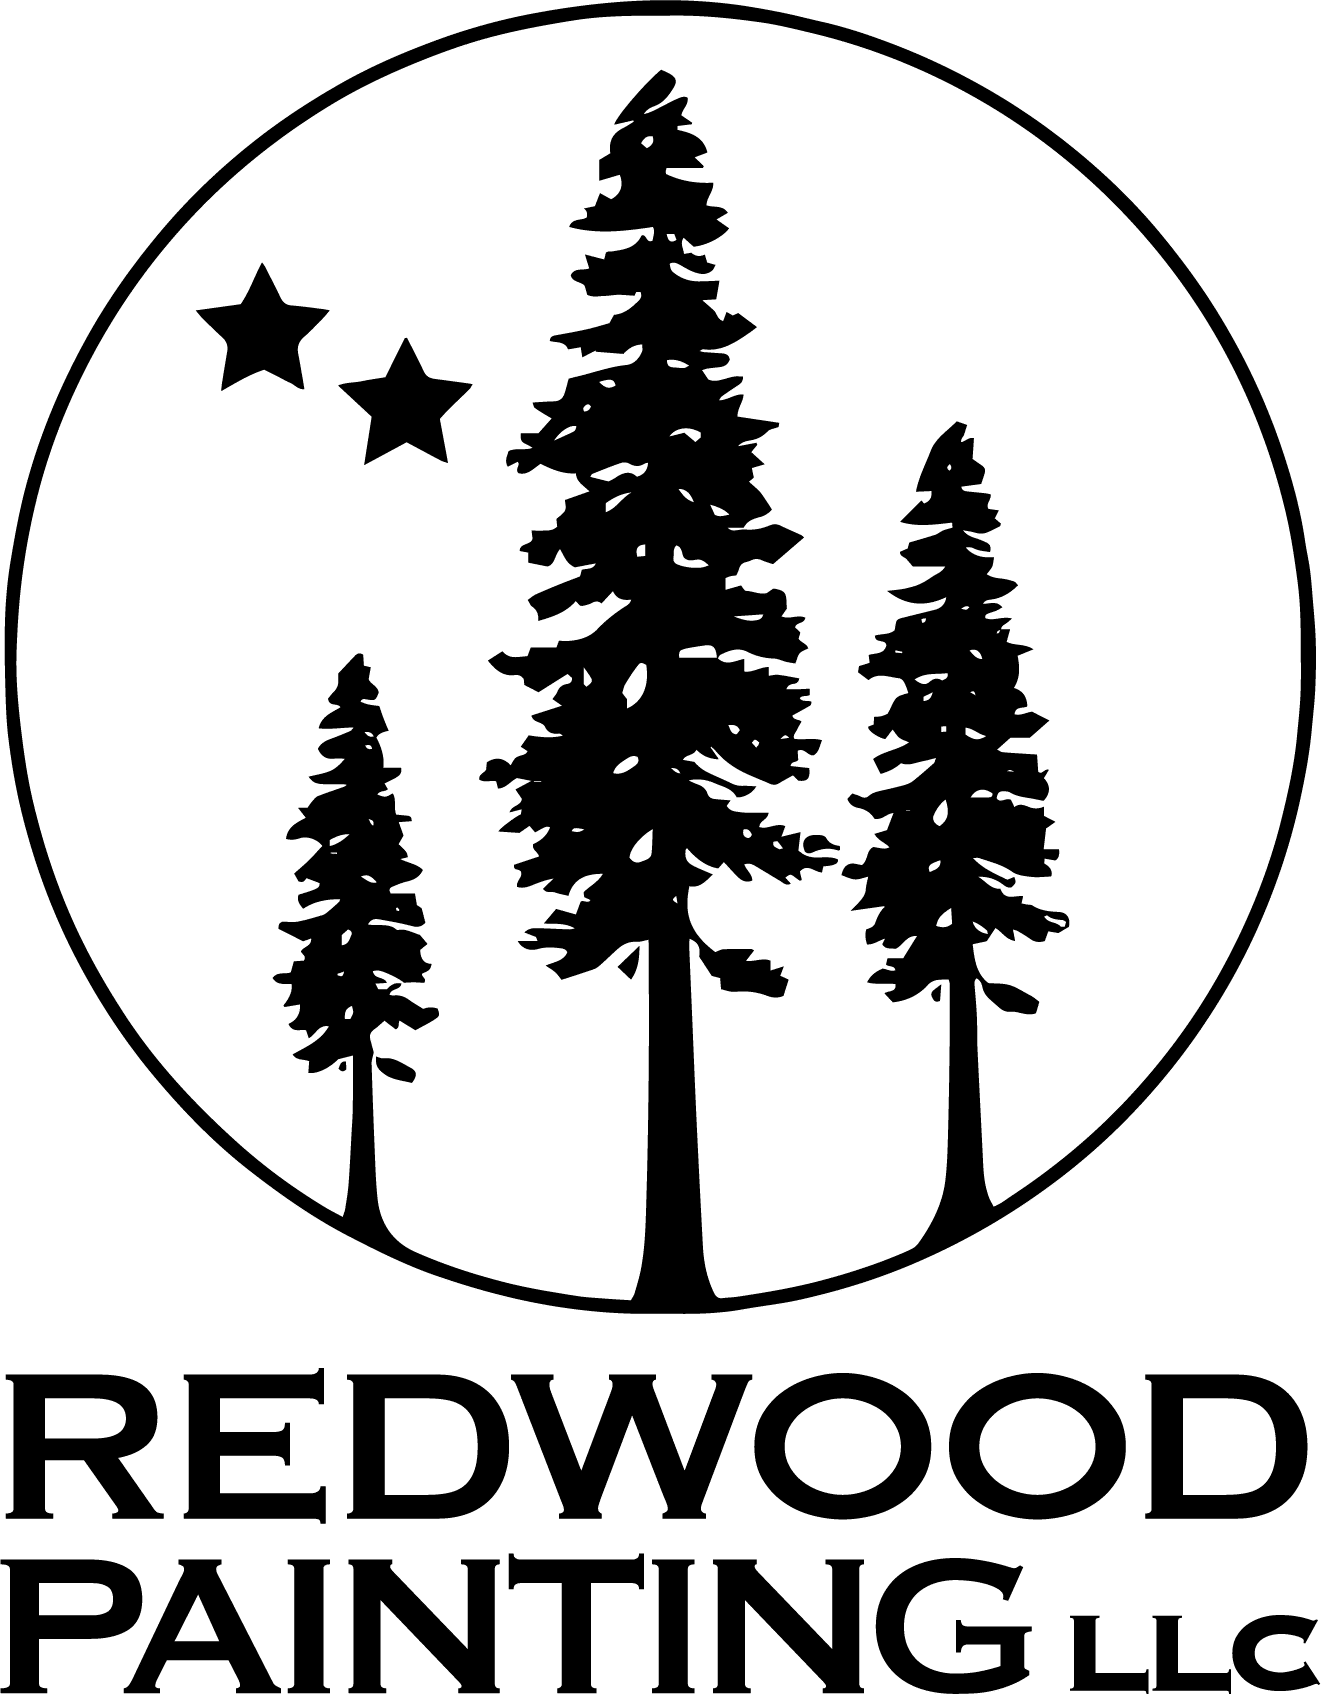 Redwood Painting LLC